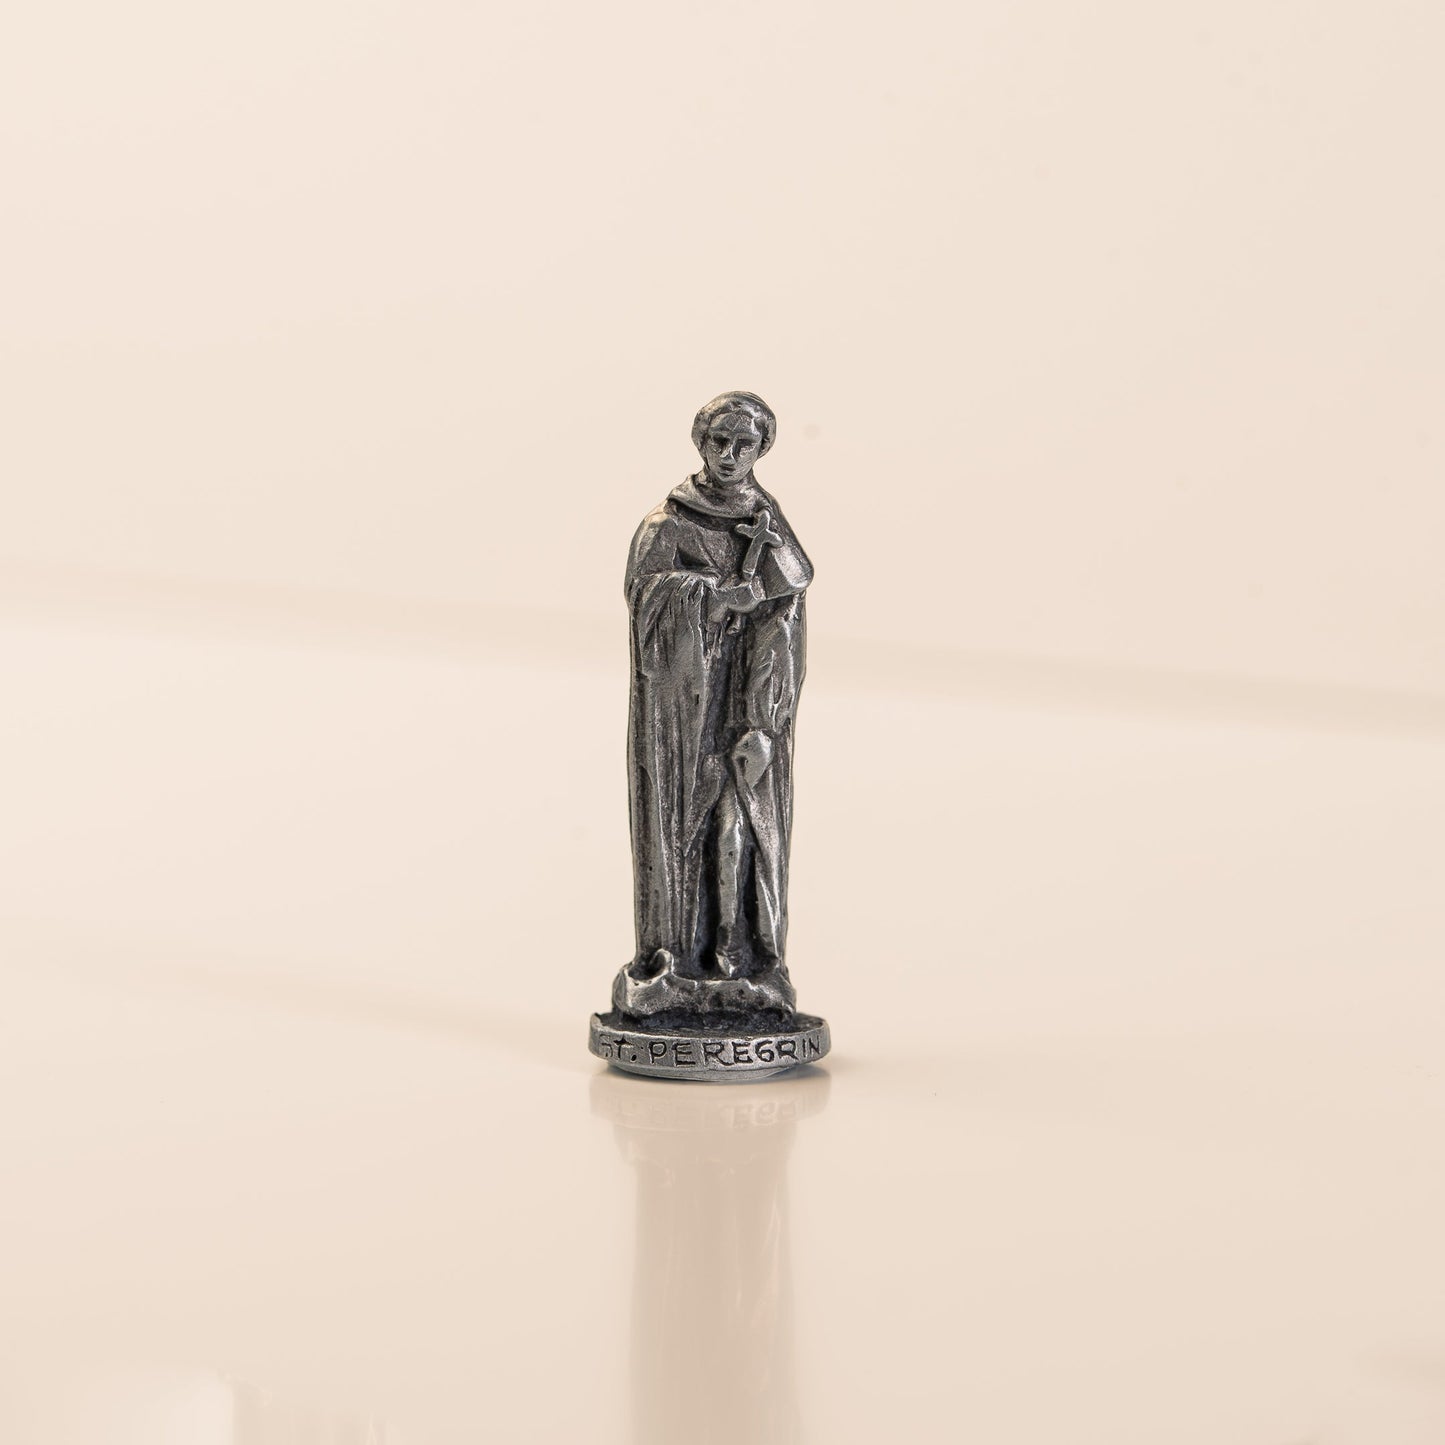 Statue of Saint Peregrine